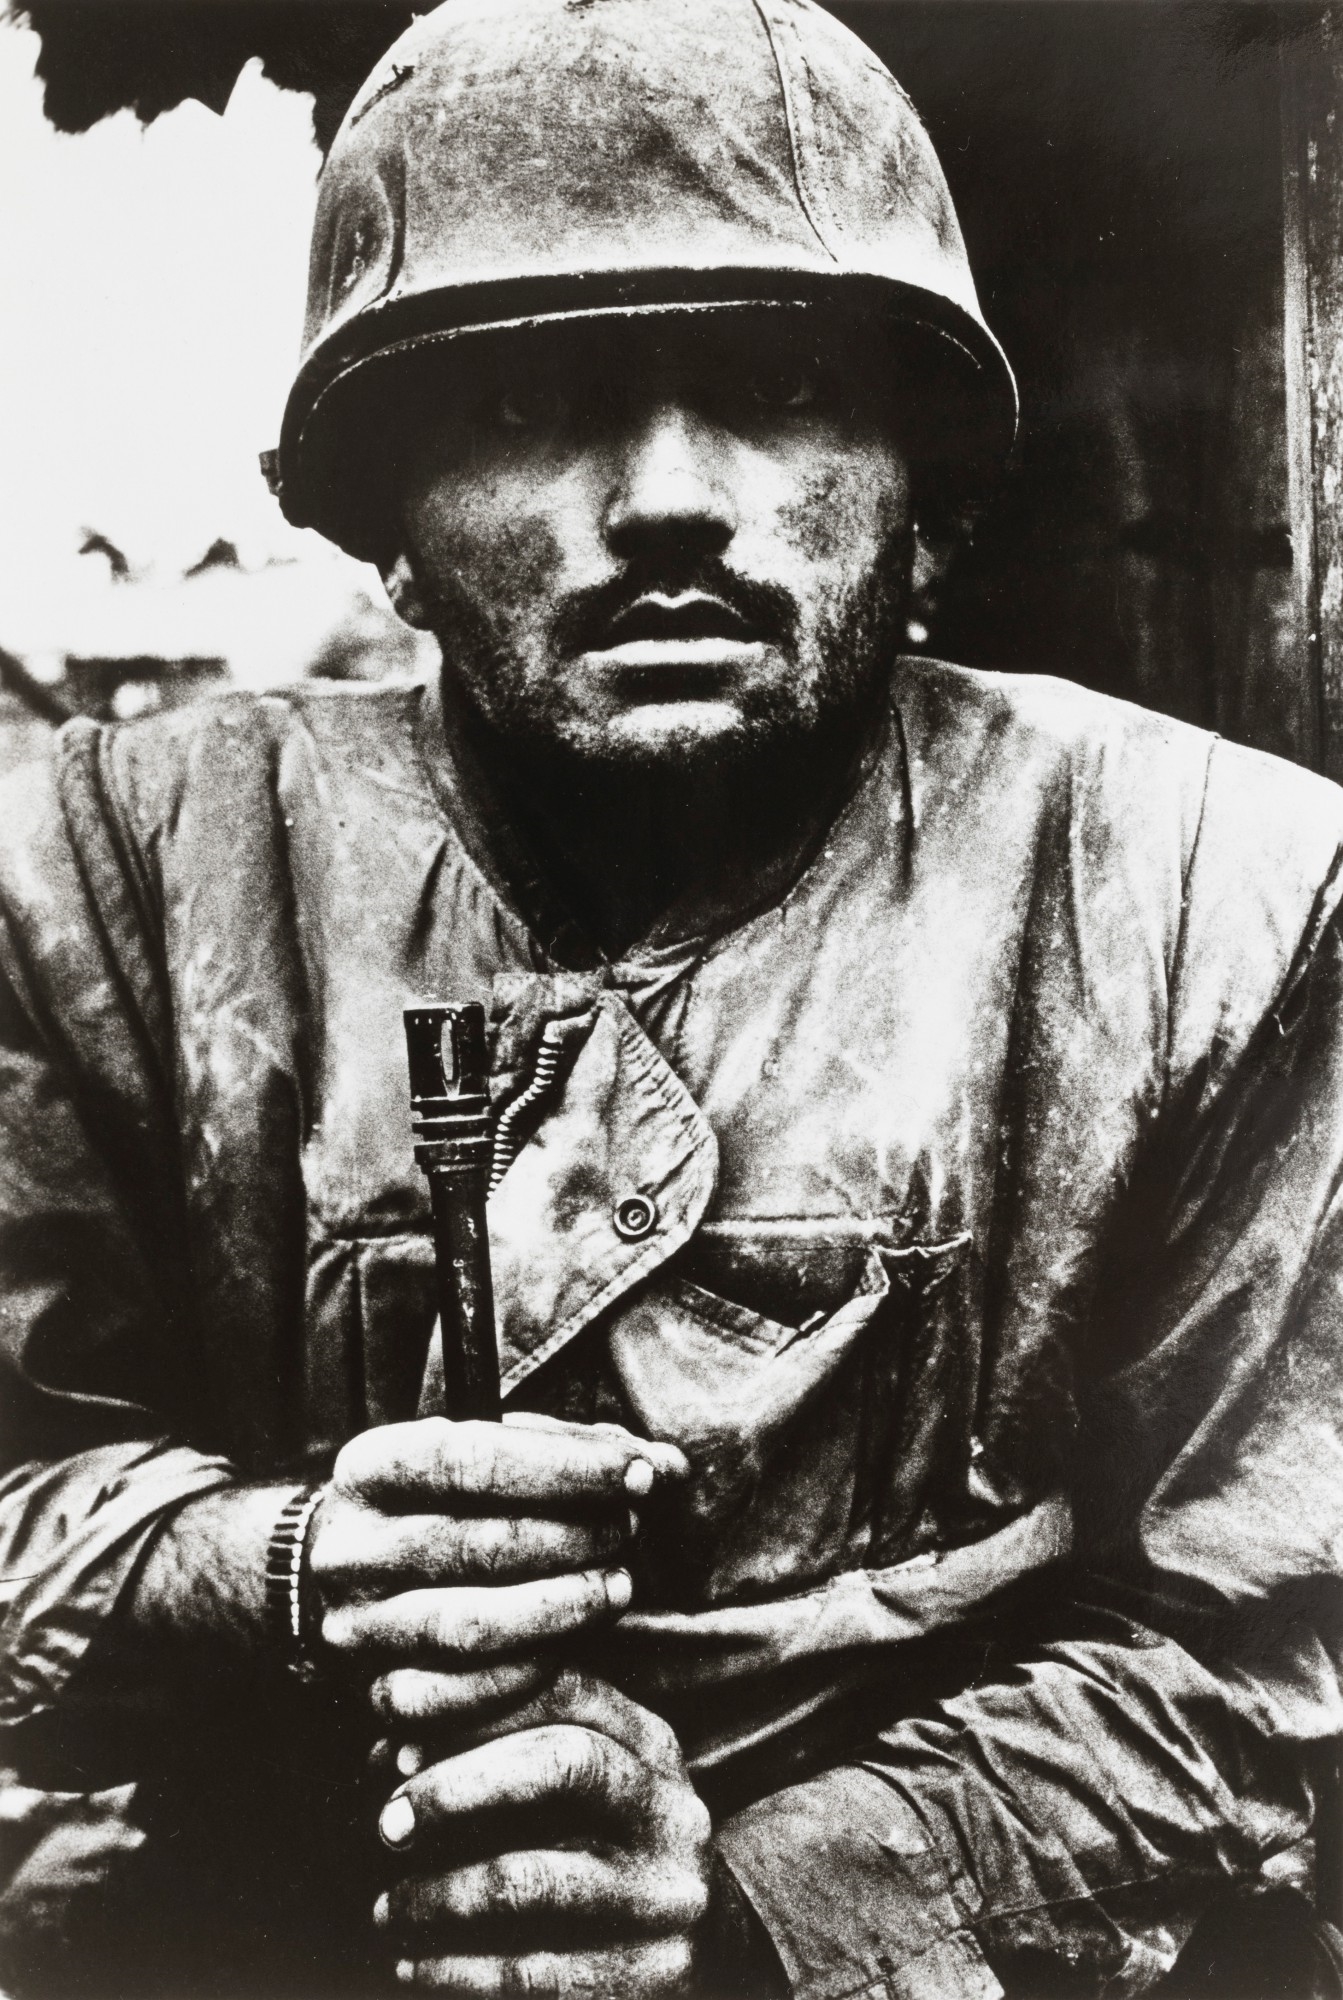 Shell Shocked Africanamerican Soldier Vietnam War Stock Photo